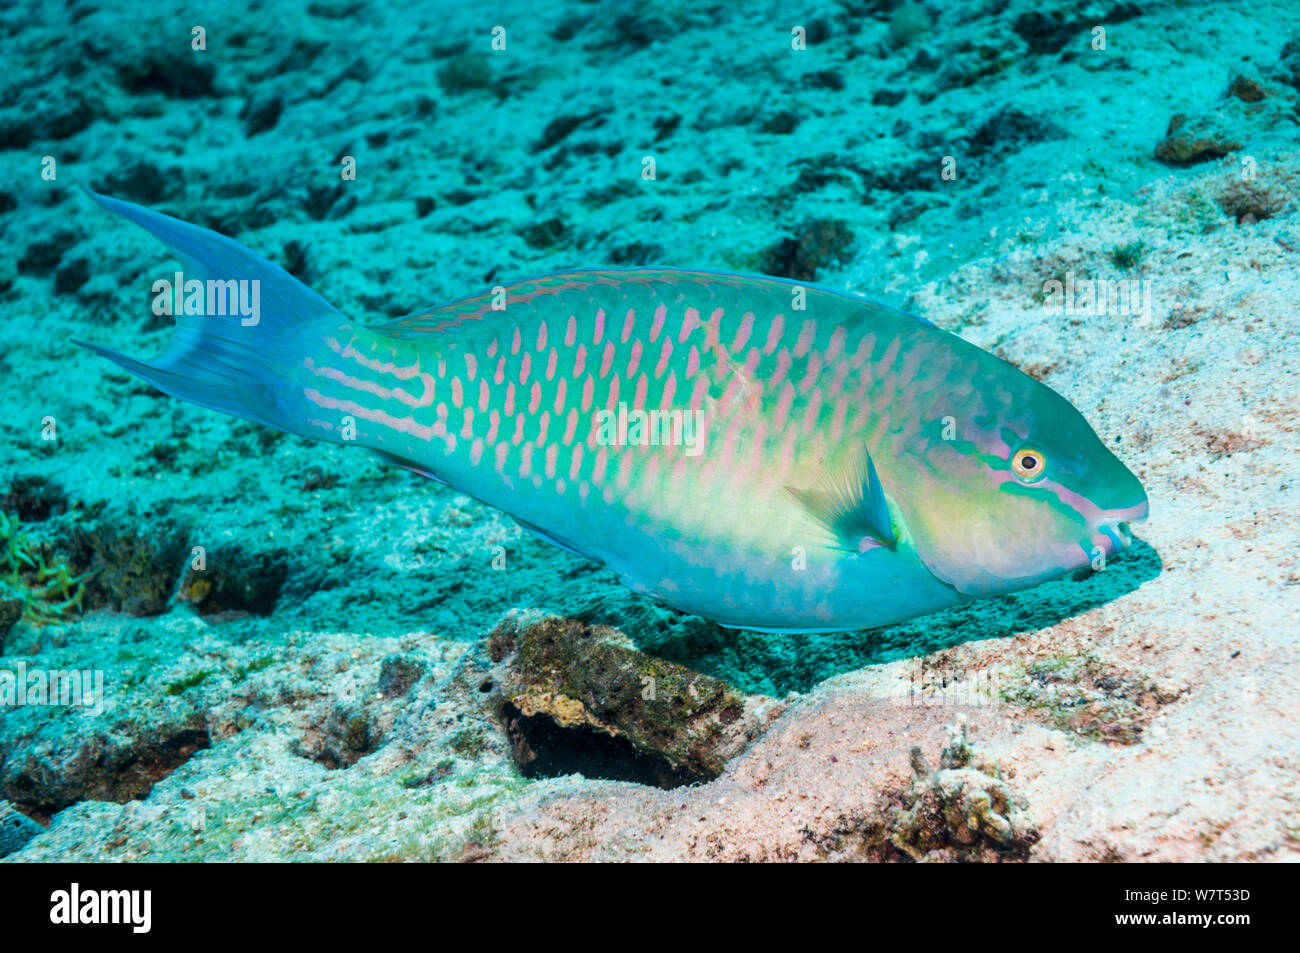 Greenband / Red Sea parrotfish (Scarus collana)  browsing on filamentous algae growing on sand . Egypt, Red Sea. Stock Photo